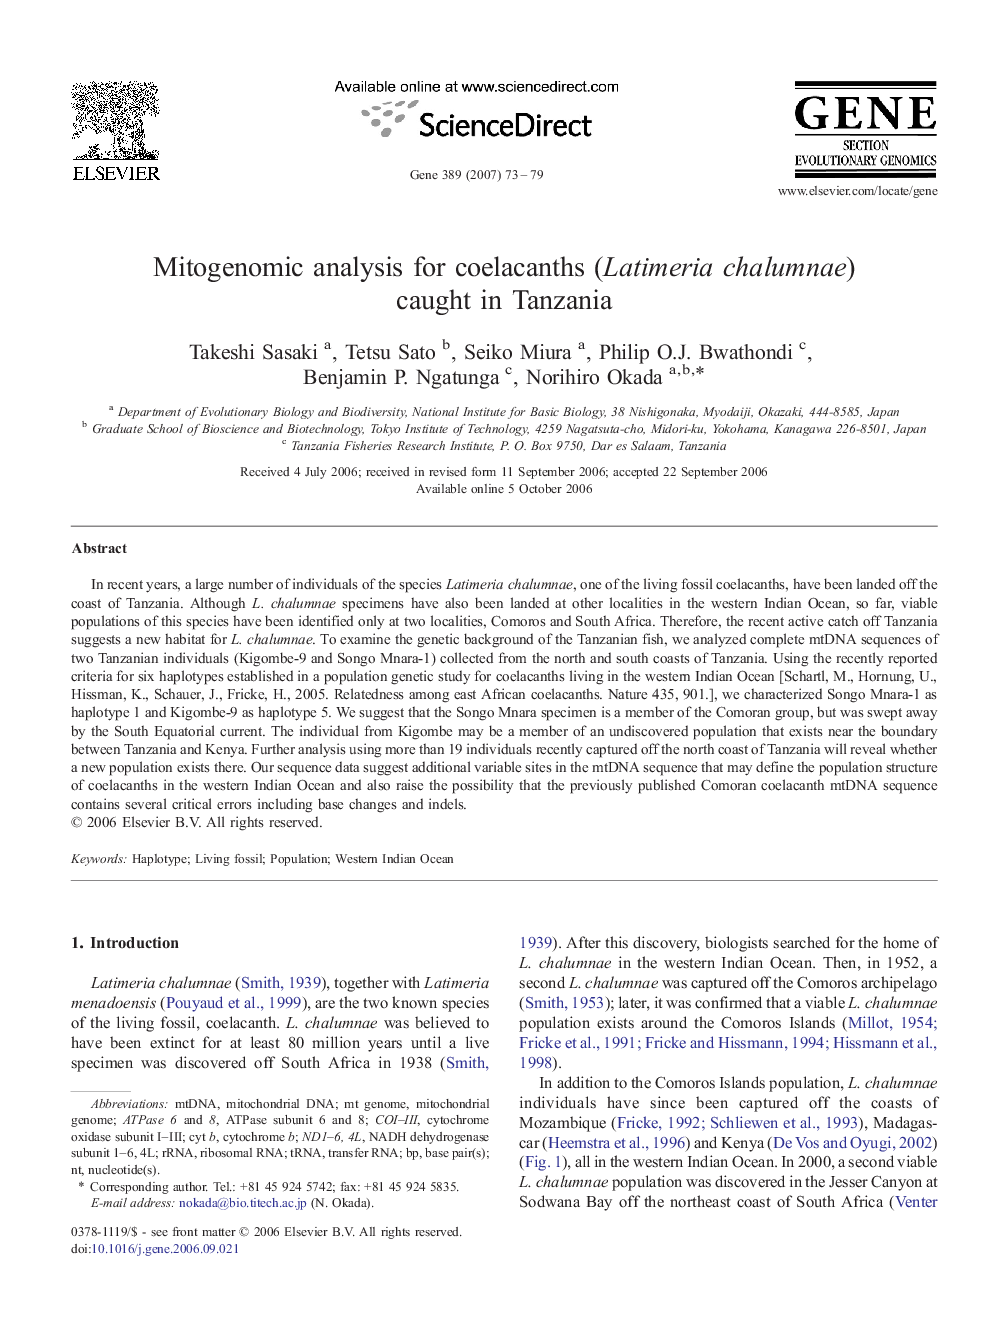 Mitogenomic analysis for coelacanths (Latimeria chalumnae) caught in Tanzania